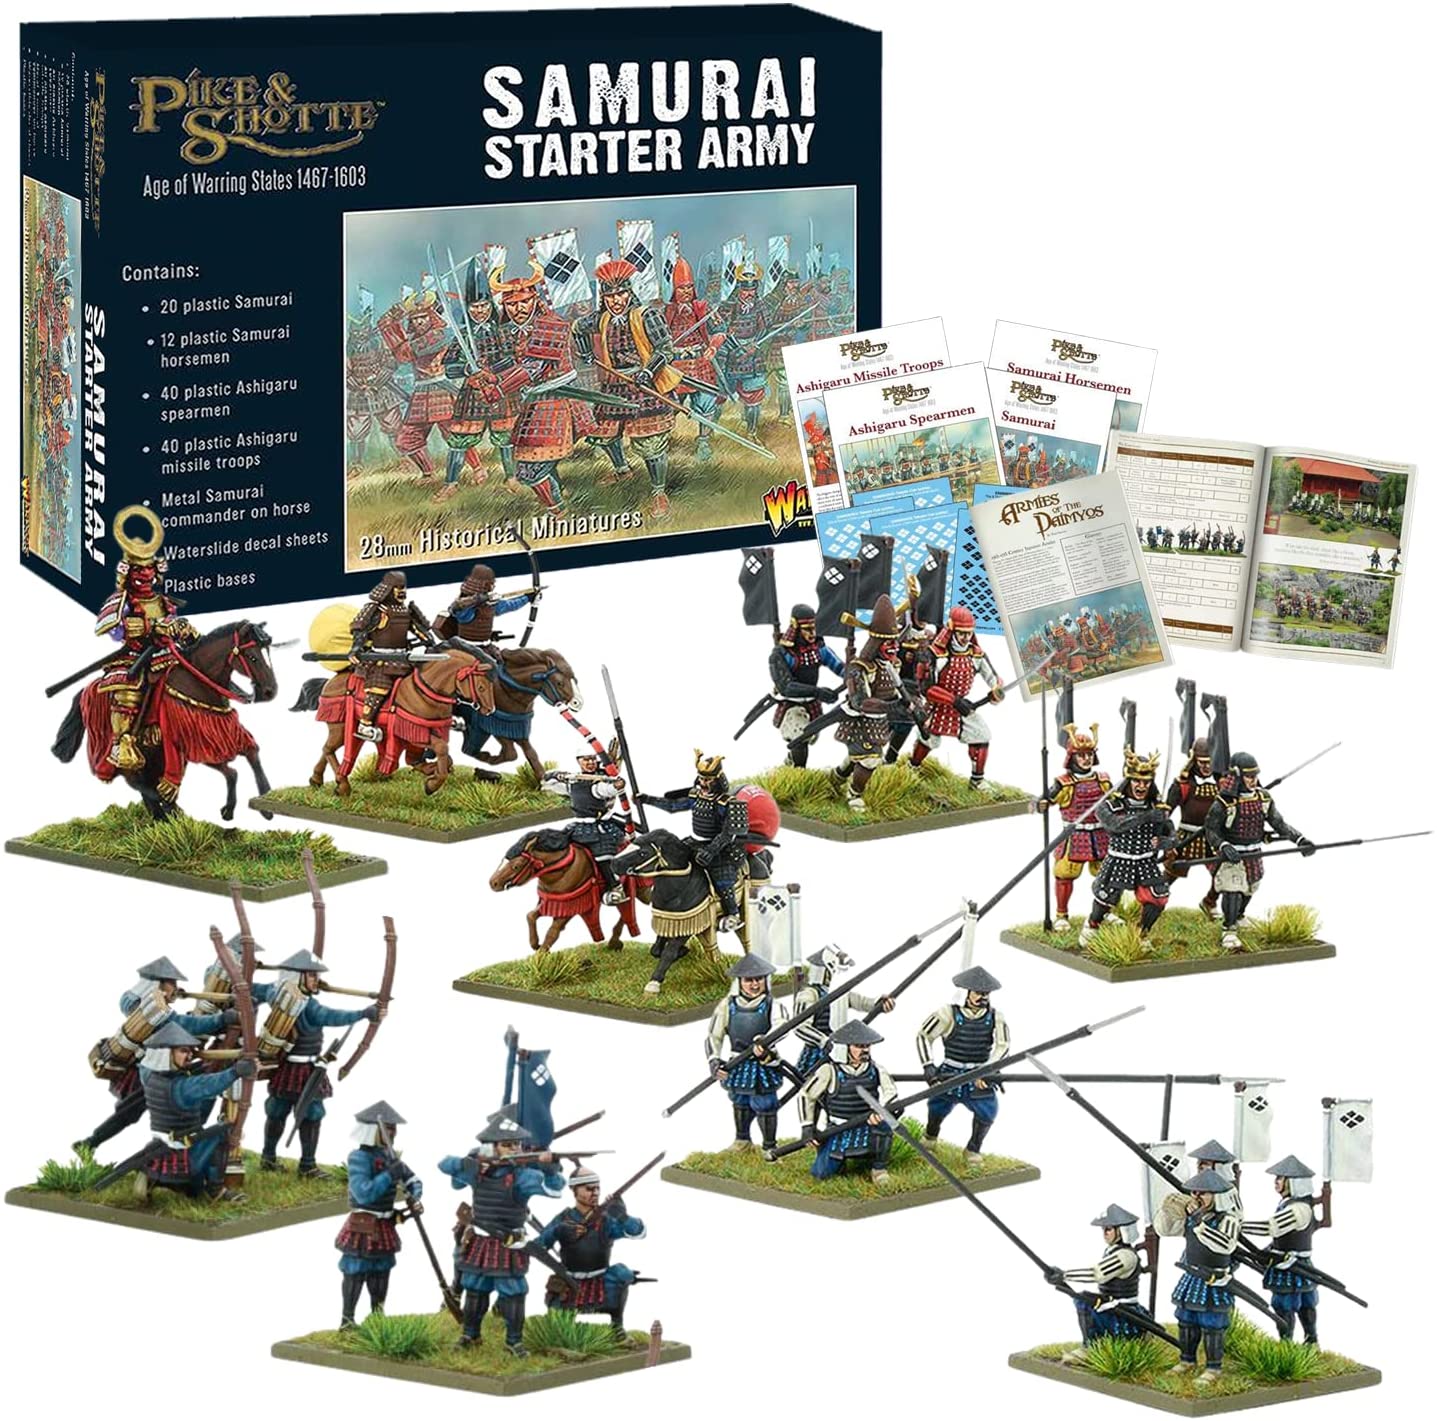 Pike & Shotte: Feudal Japan 1467 - 1603: Samurai Starter Army